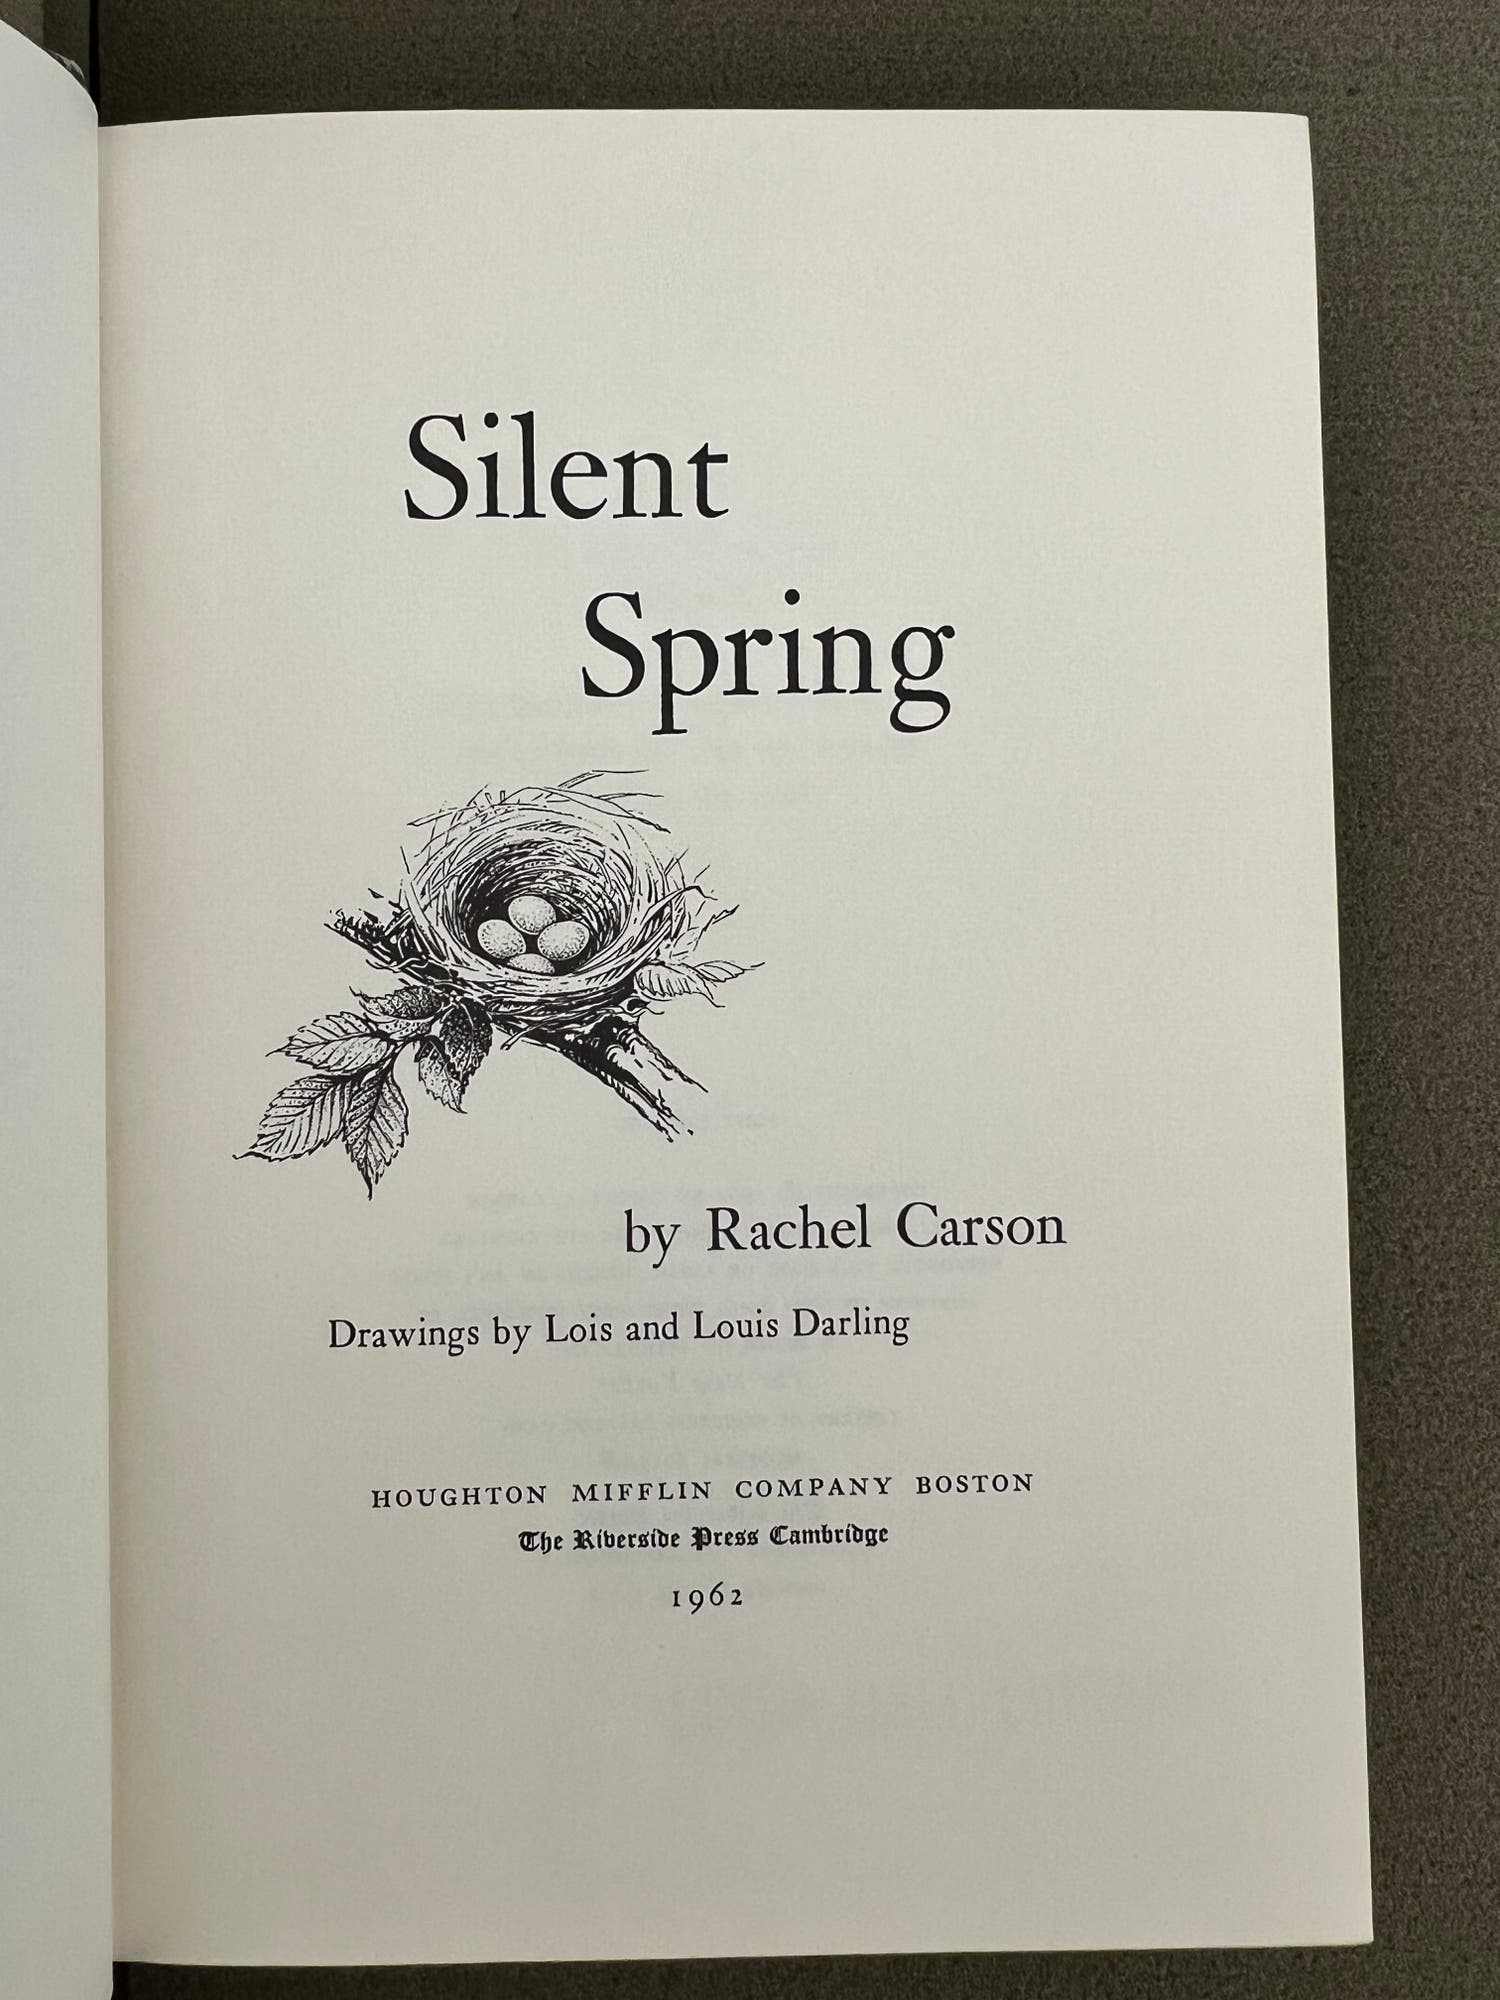 Rachel Carson, Silent Spring, Boston, 1962 (Linda Hall Library)